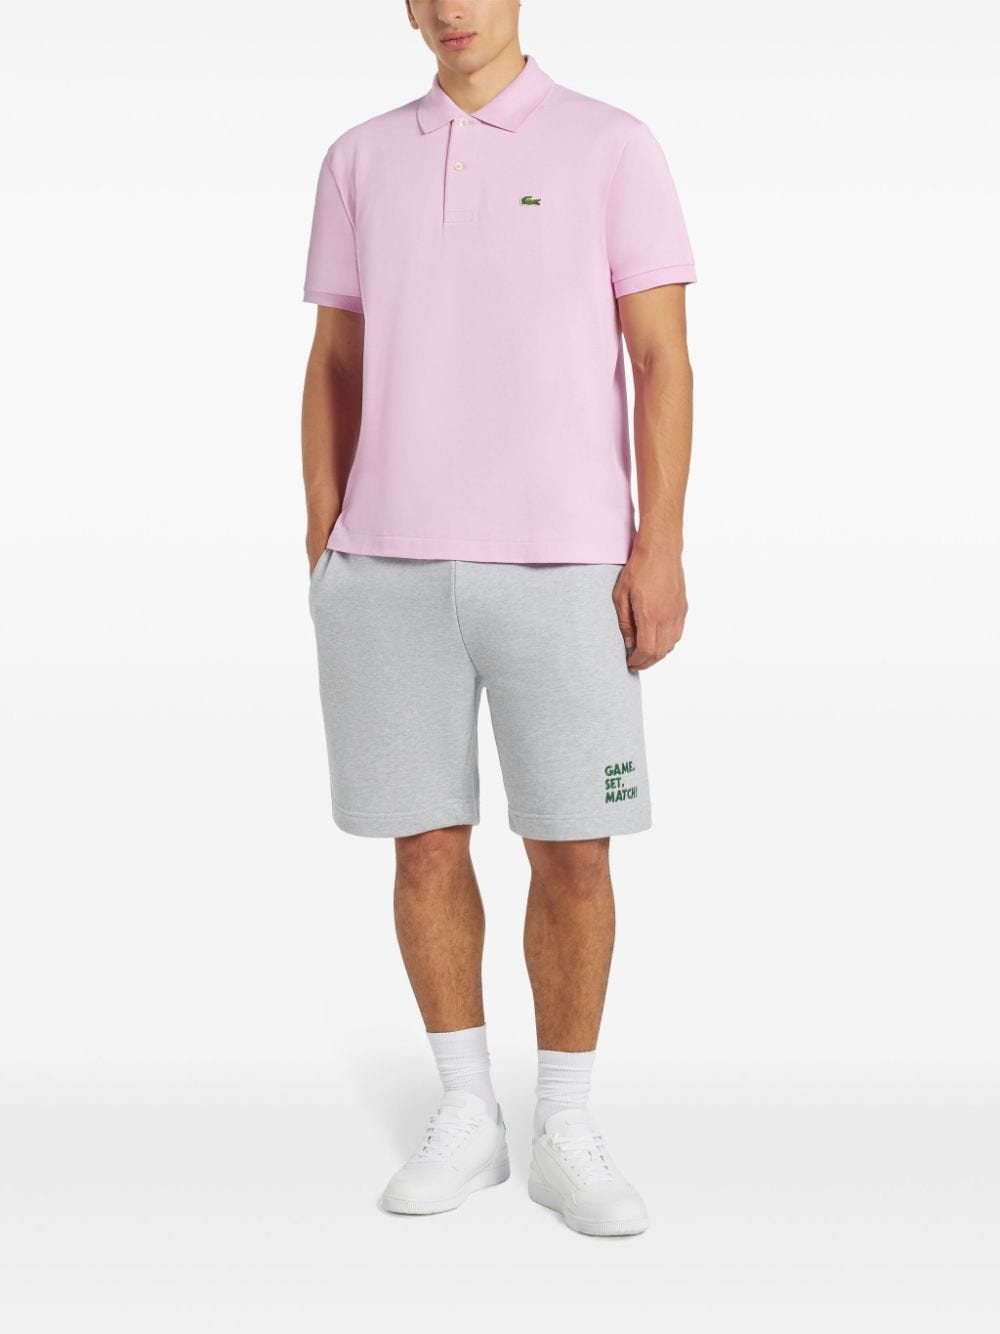 Regular fit pink polo shirt